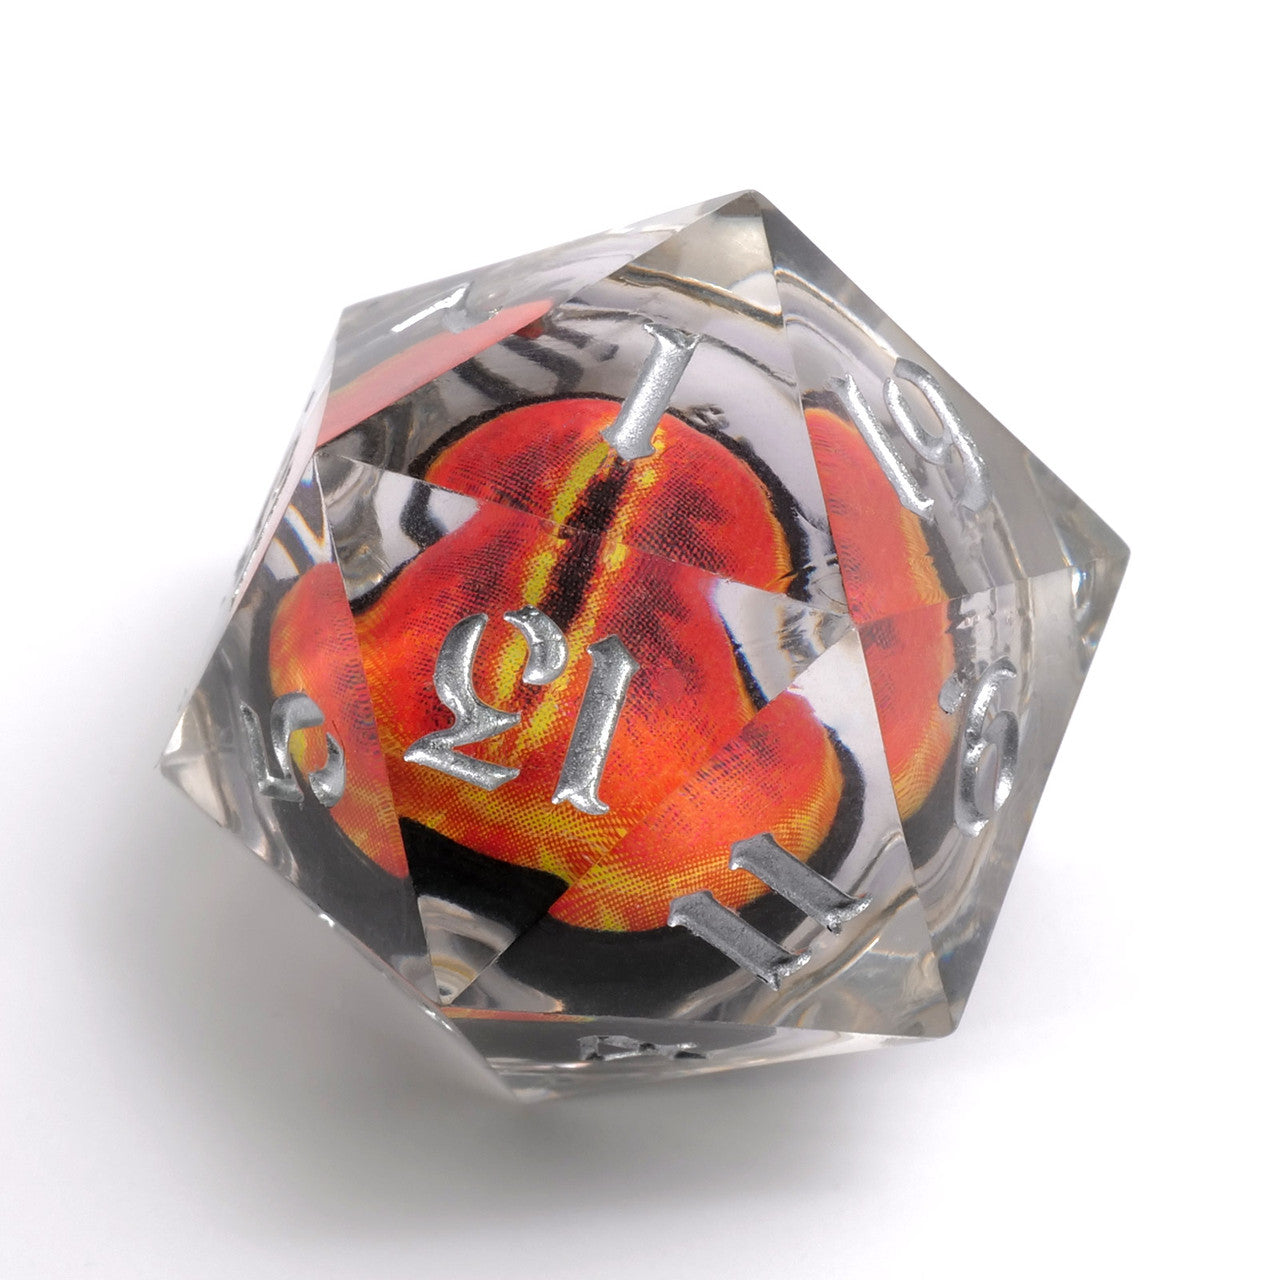 Dragon's eye D20 necklace-Silver w/Pink gems